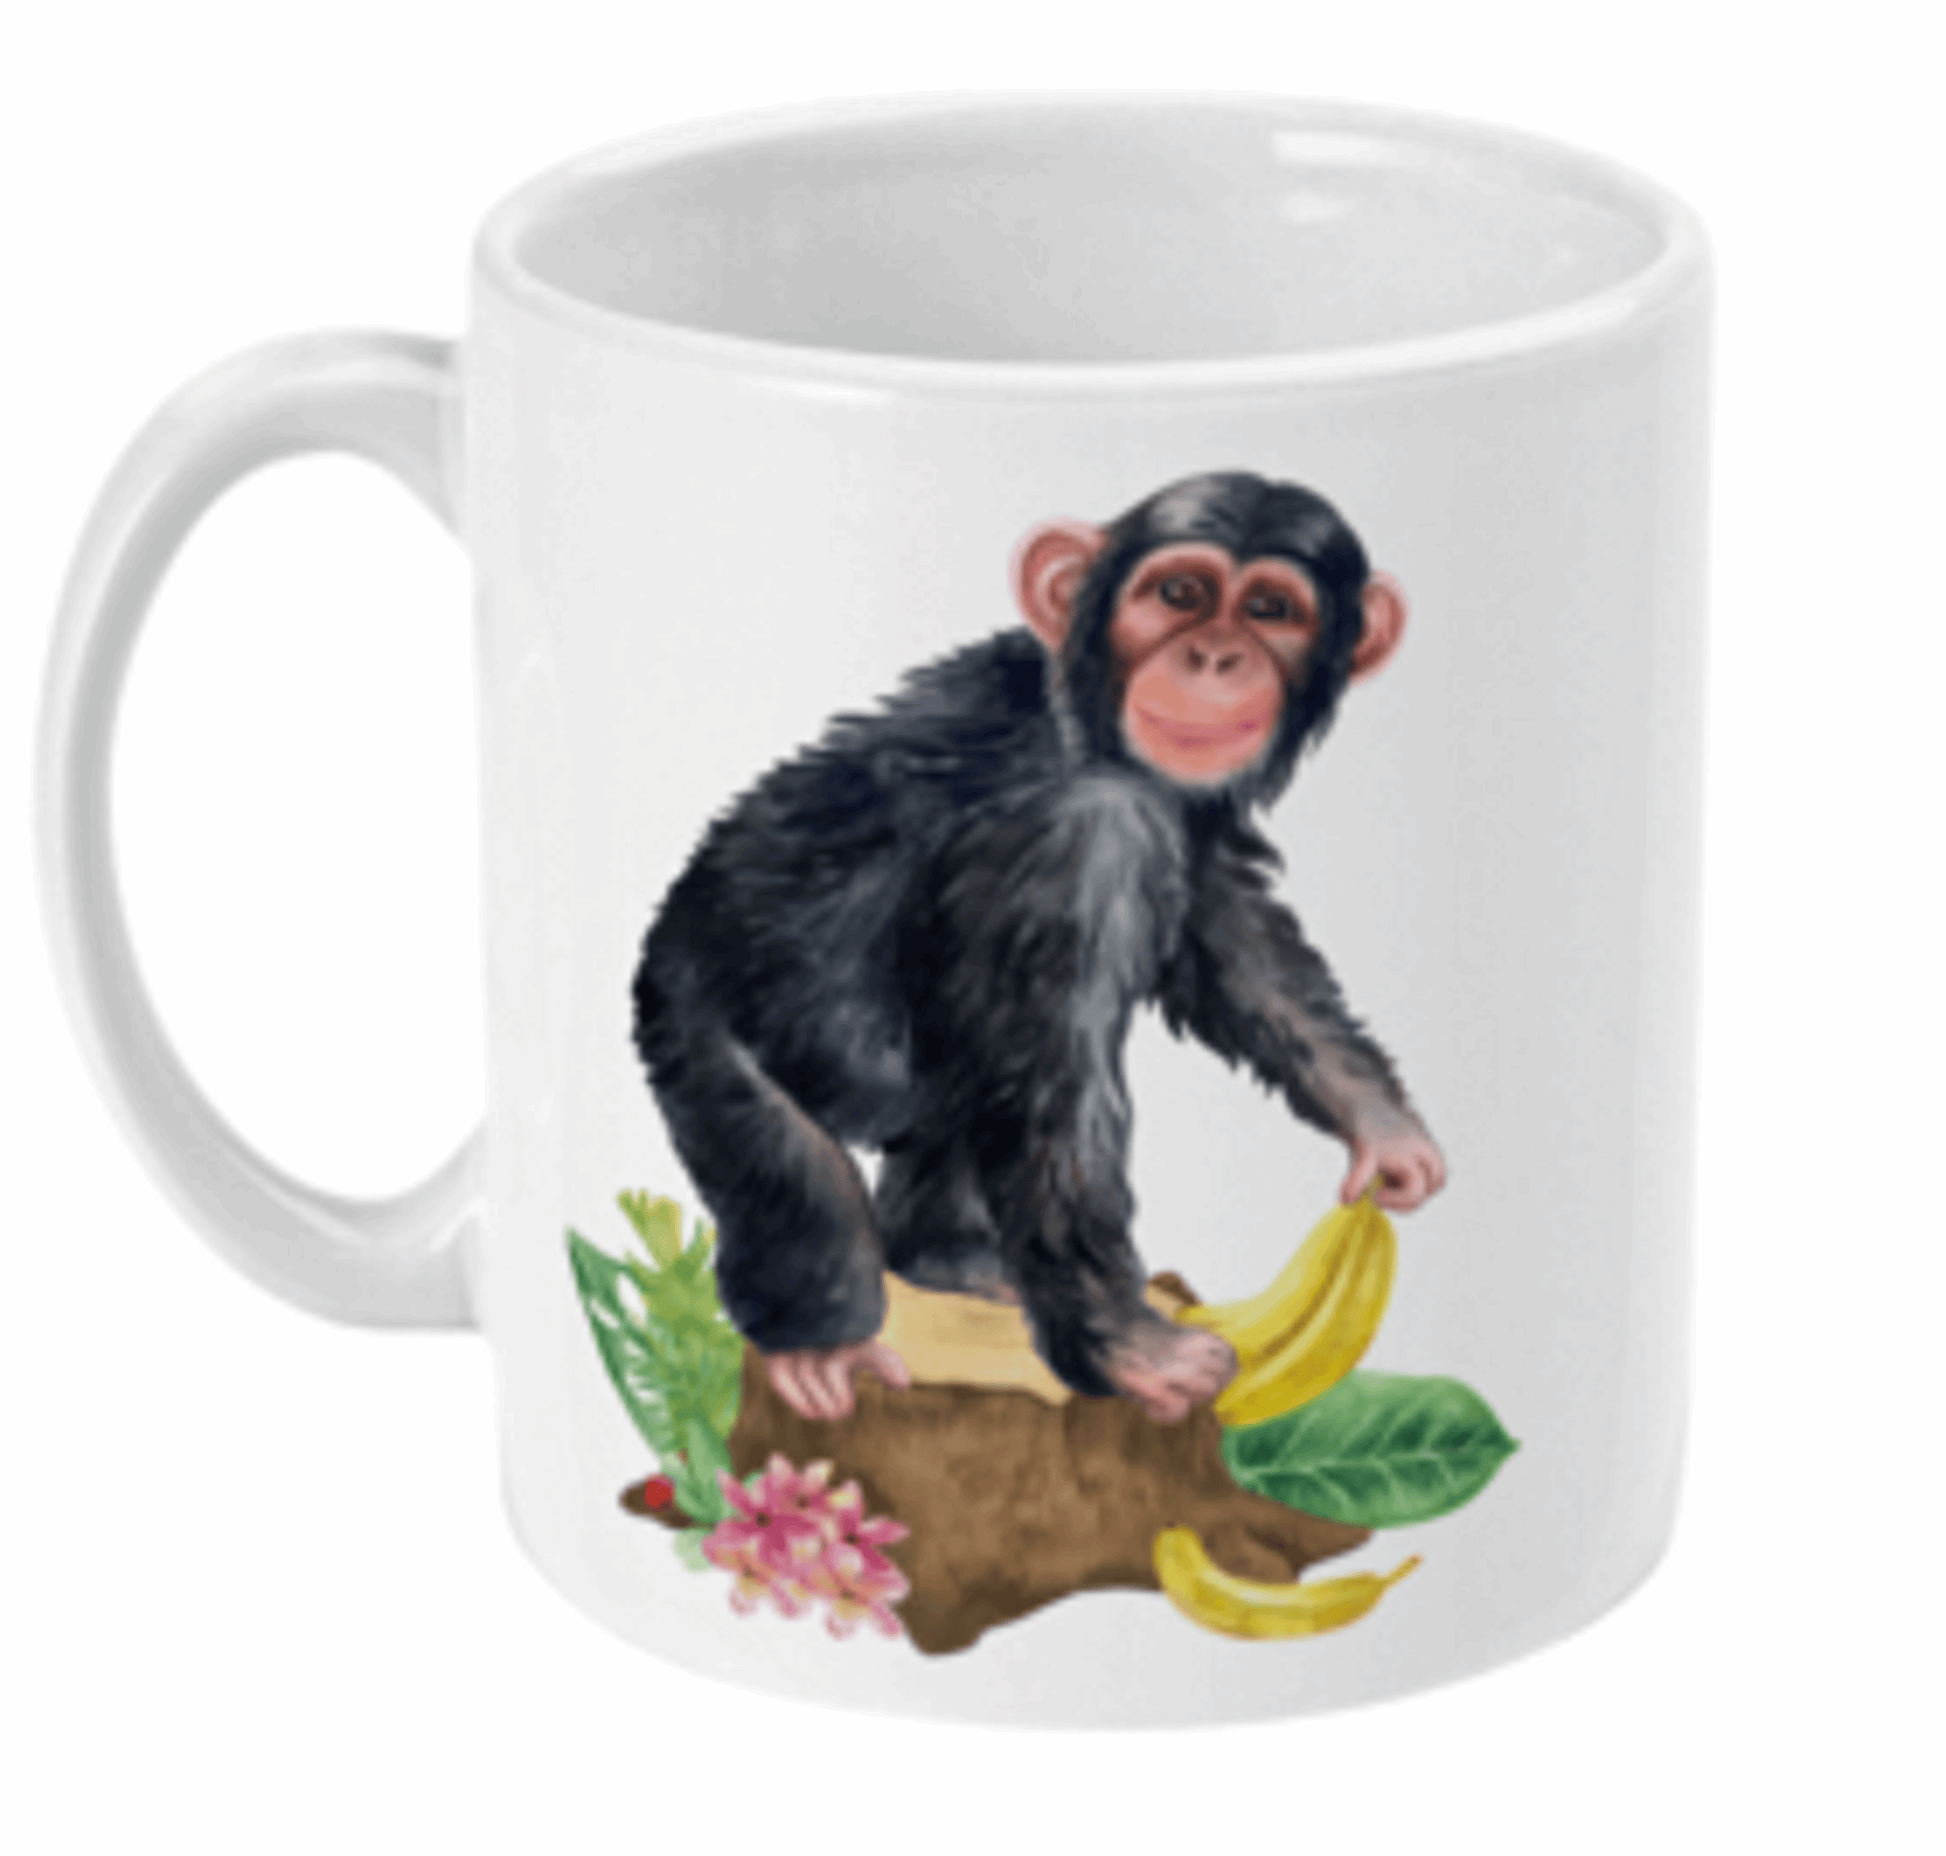  Chimpanzee Monkey With Bananas Coffee Mug by Free Spirit Accessories sold by Free Spirit Accessories